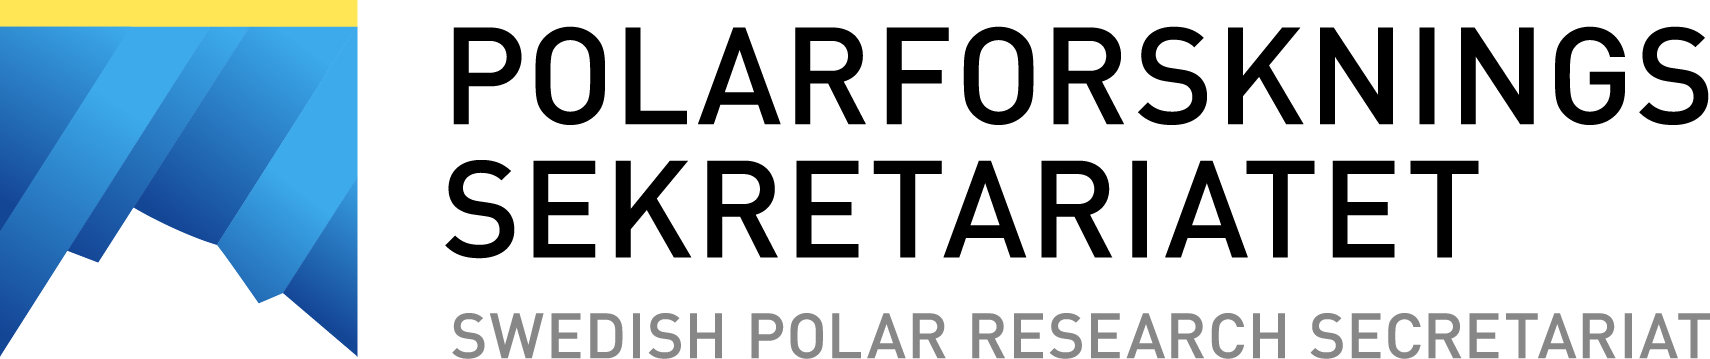 Polarforskningssekretariatet logotyp